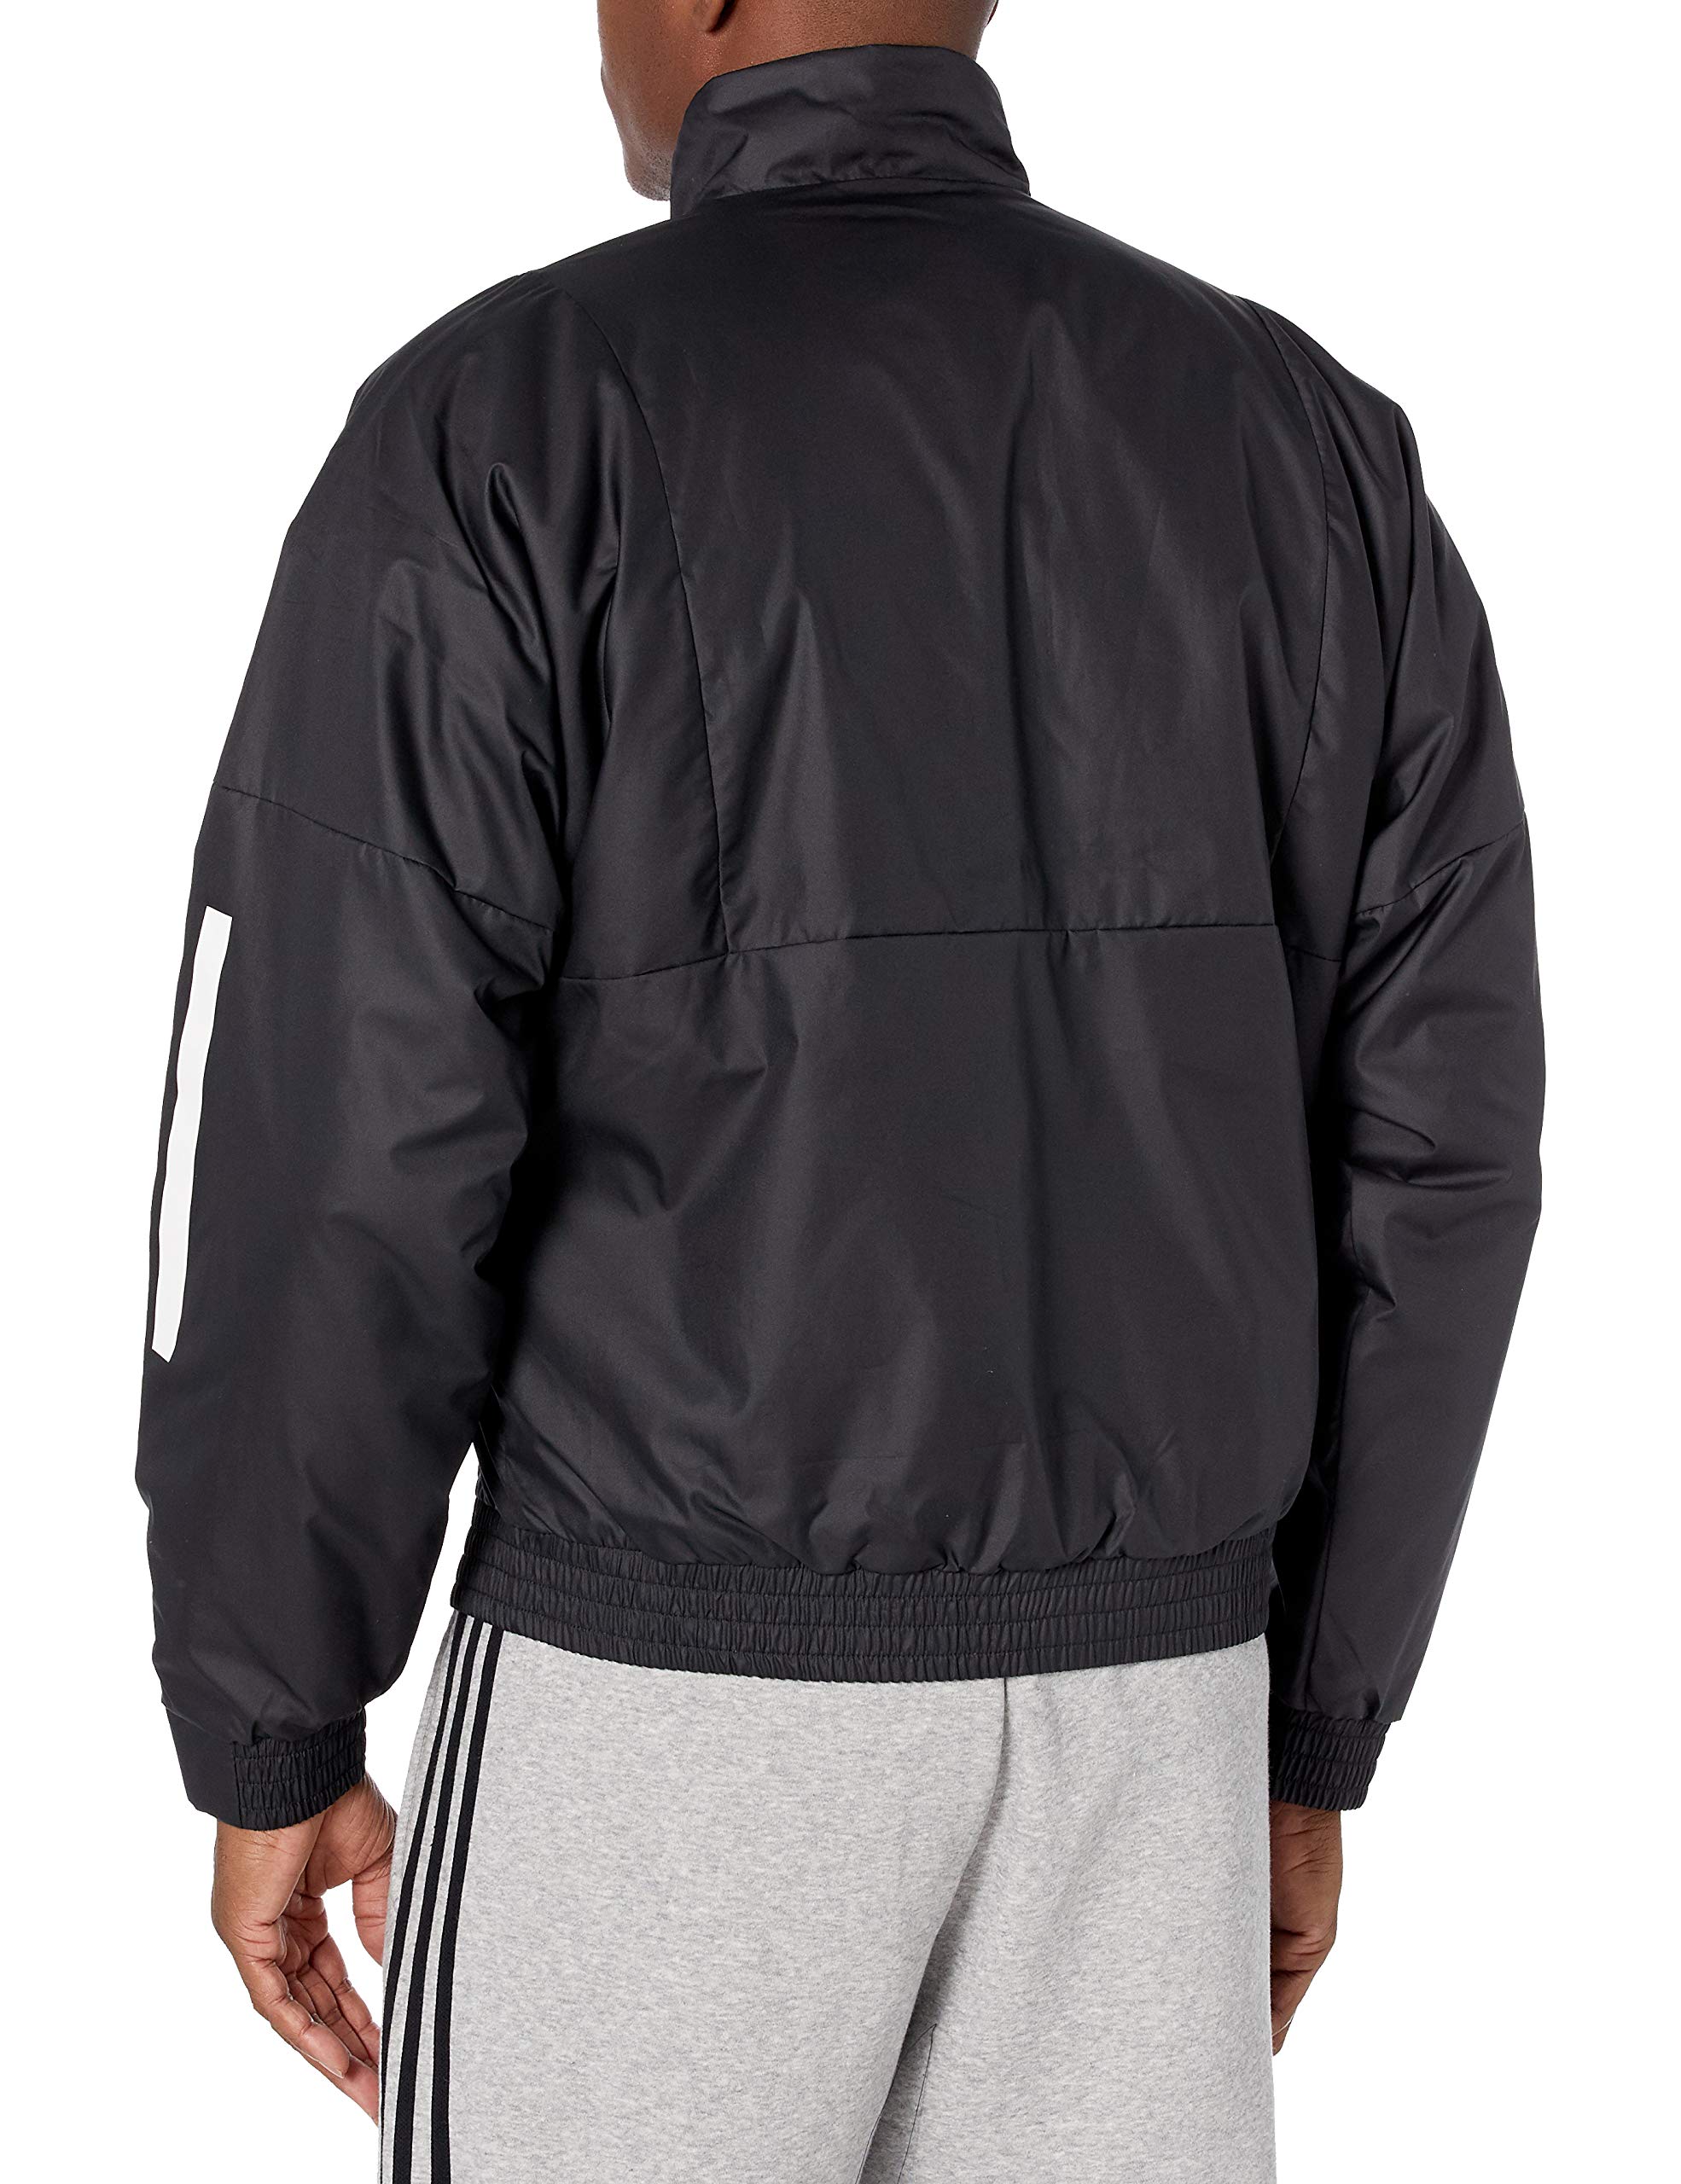 adidas Outdoor mens Back to School Light Jacket Black/White Large